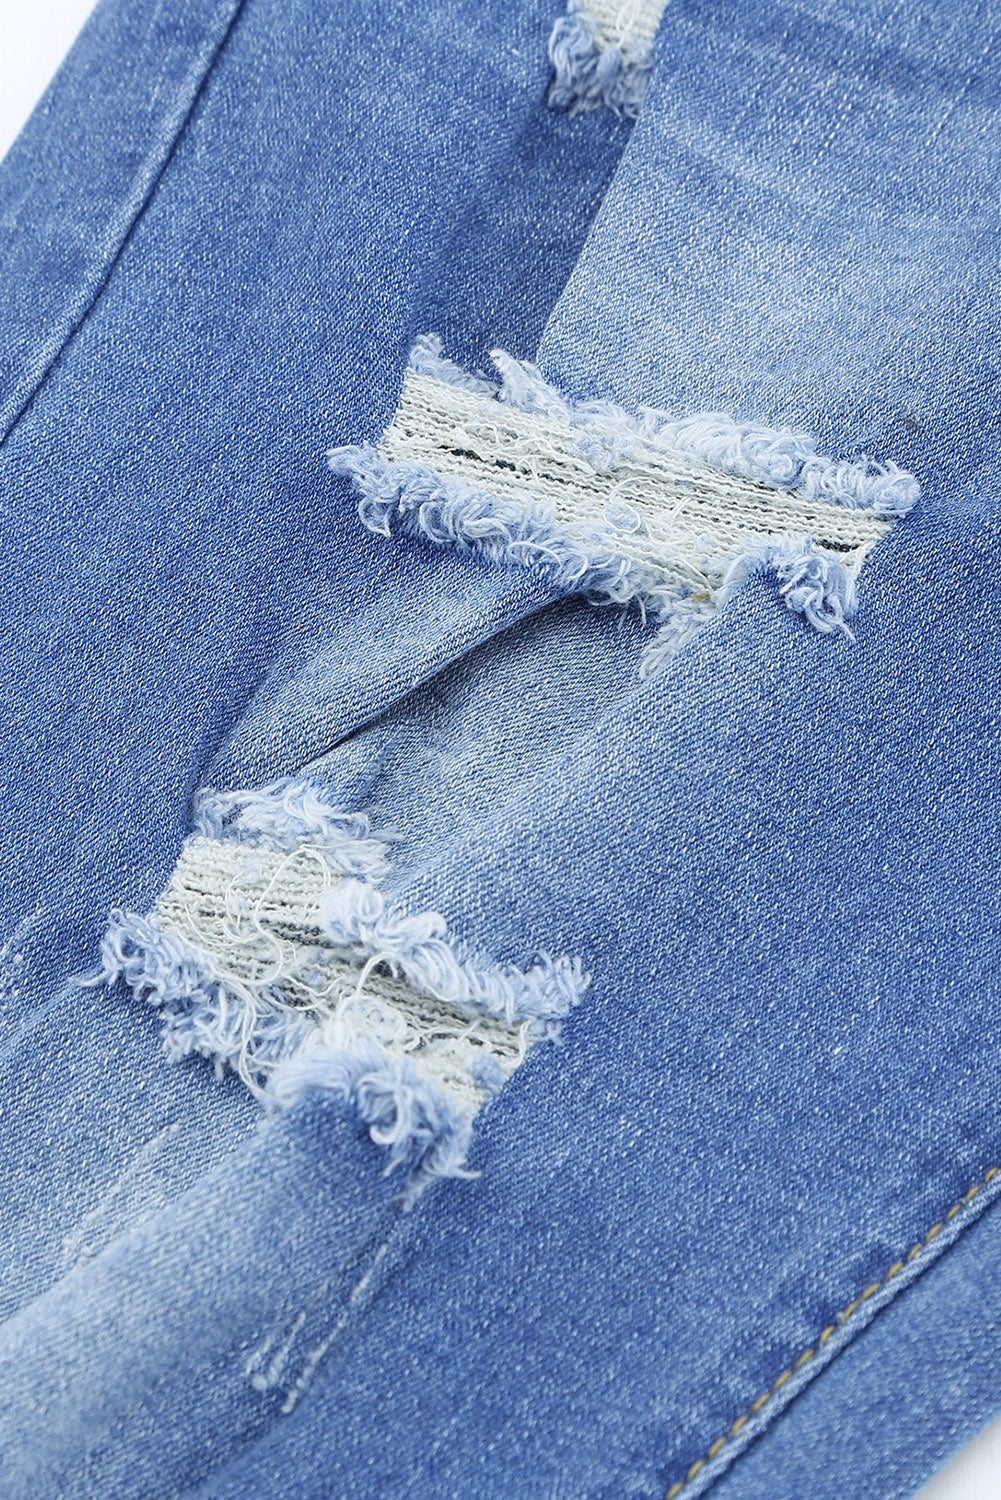 Sky Blue Women's Ripped Boyfriend Jeans Distressed Holes Crop Denim Pants LC78064-4